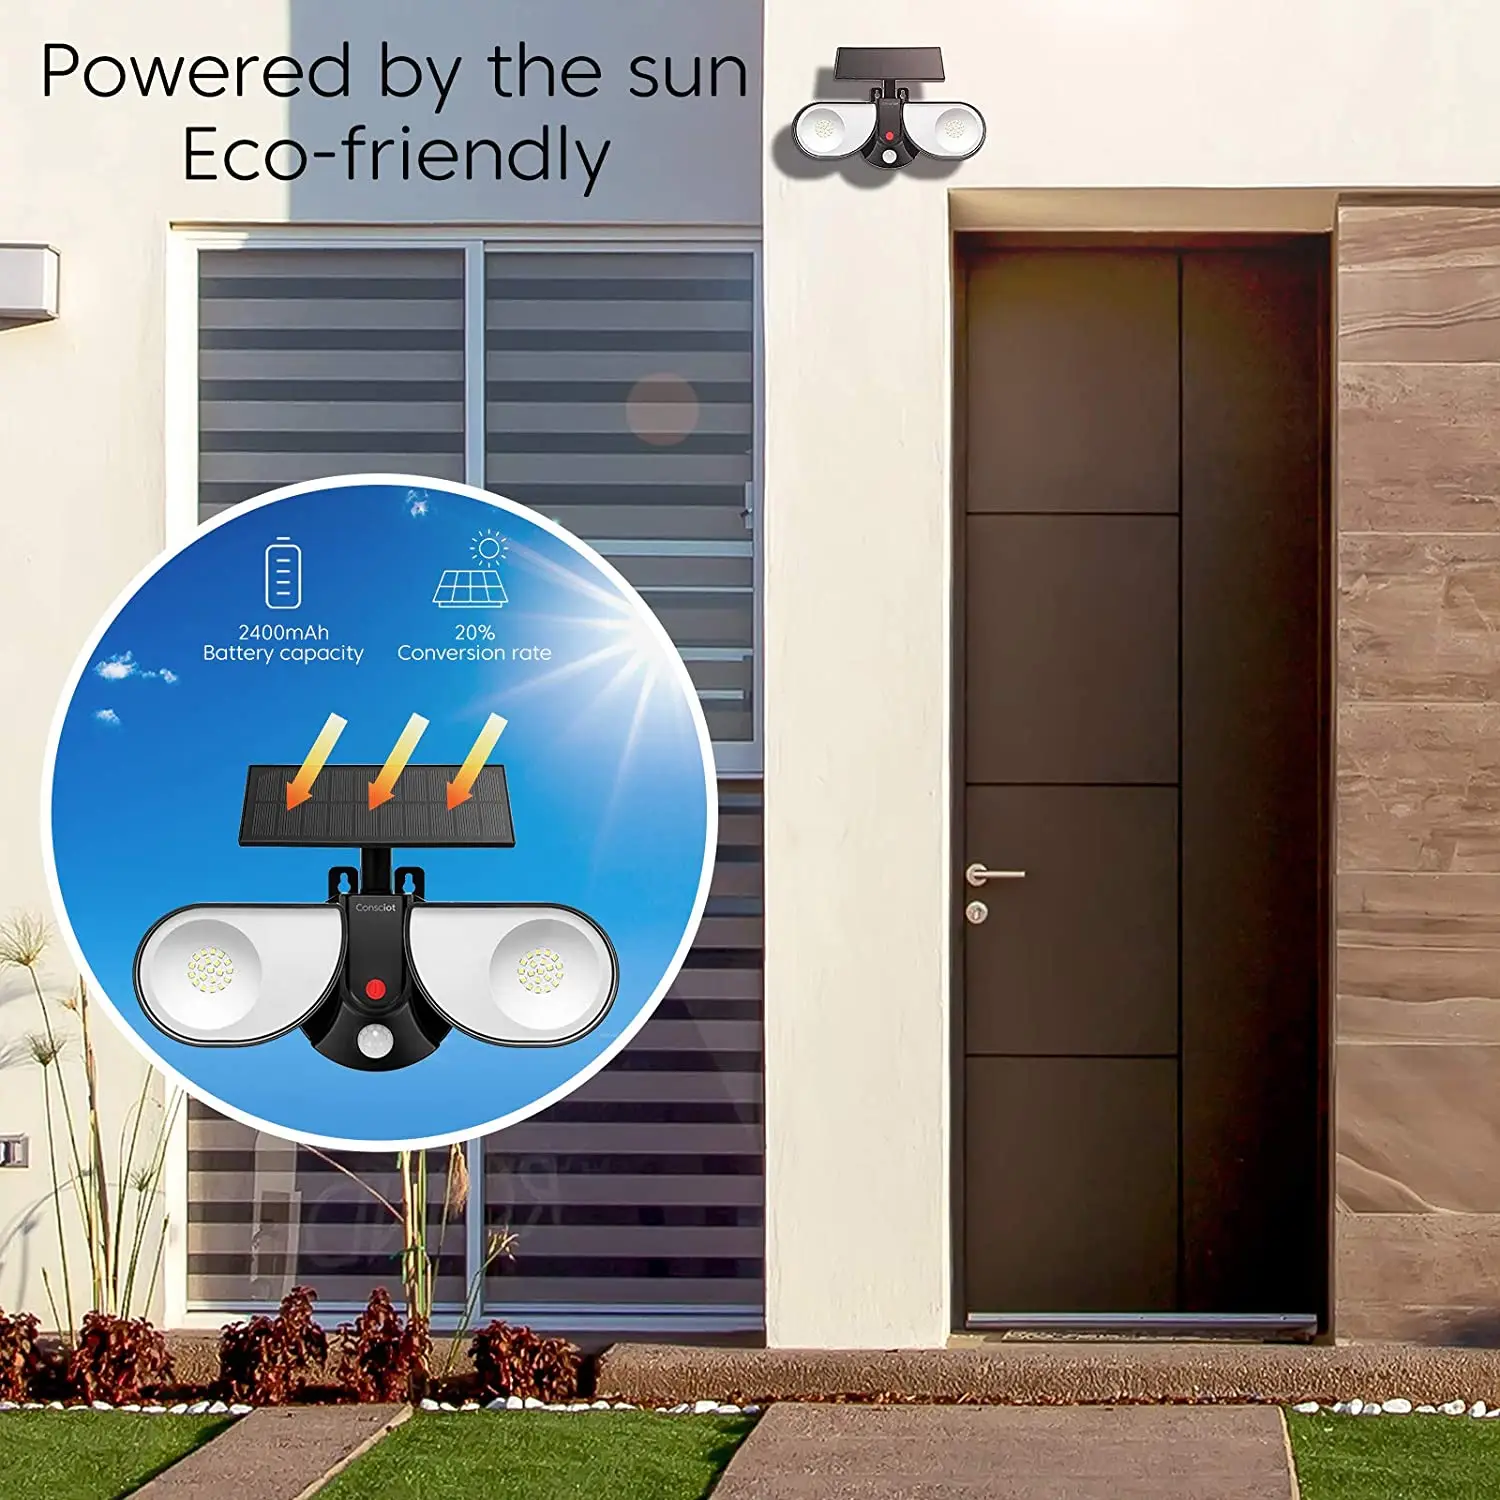 2 Adjustable Heads Solar Lights Outdoor Detachable Solar Panel Solar Wall Lights With Motion Sensor Security Solar Wall Light